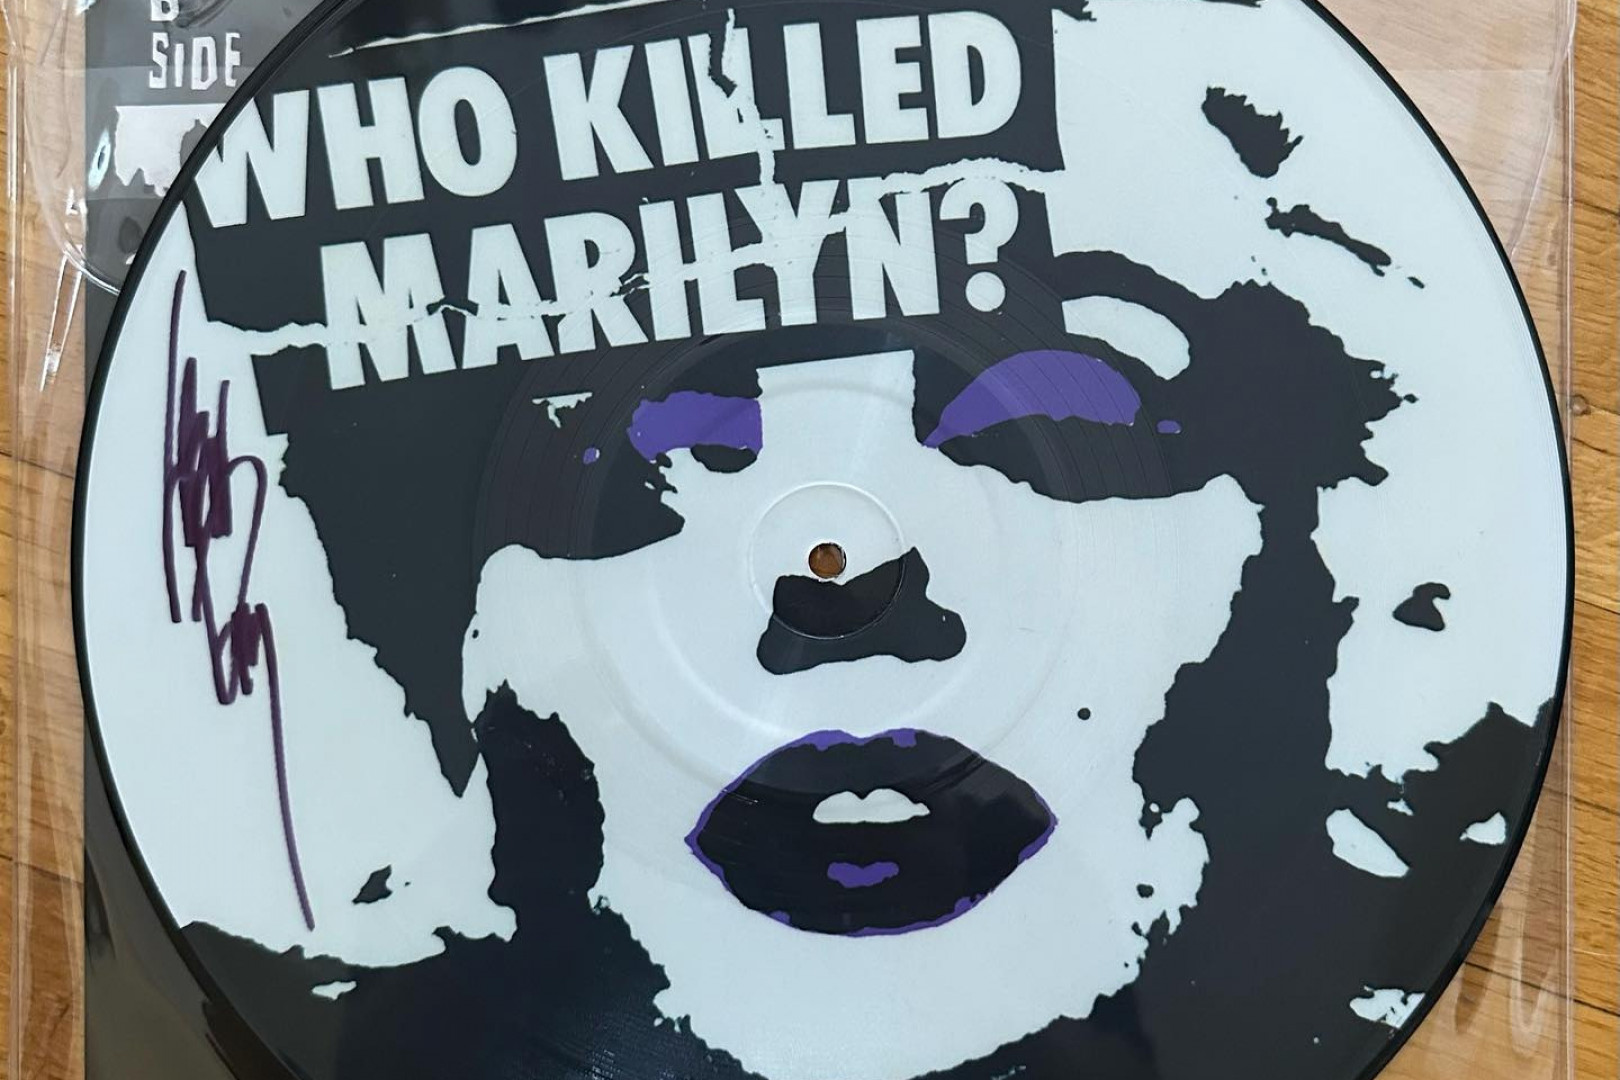 Glenn Danzig to re-release 'Who killed Marilyn' single